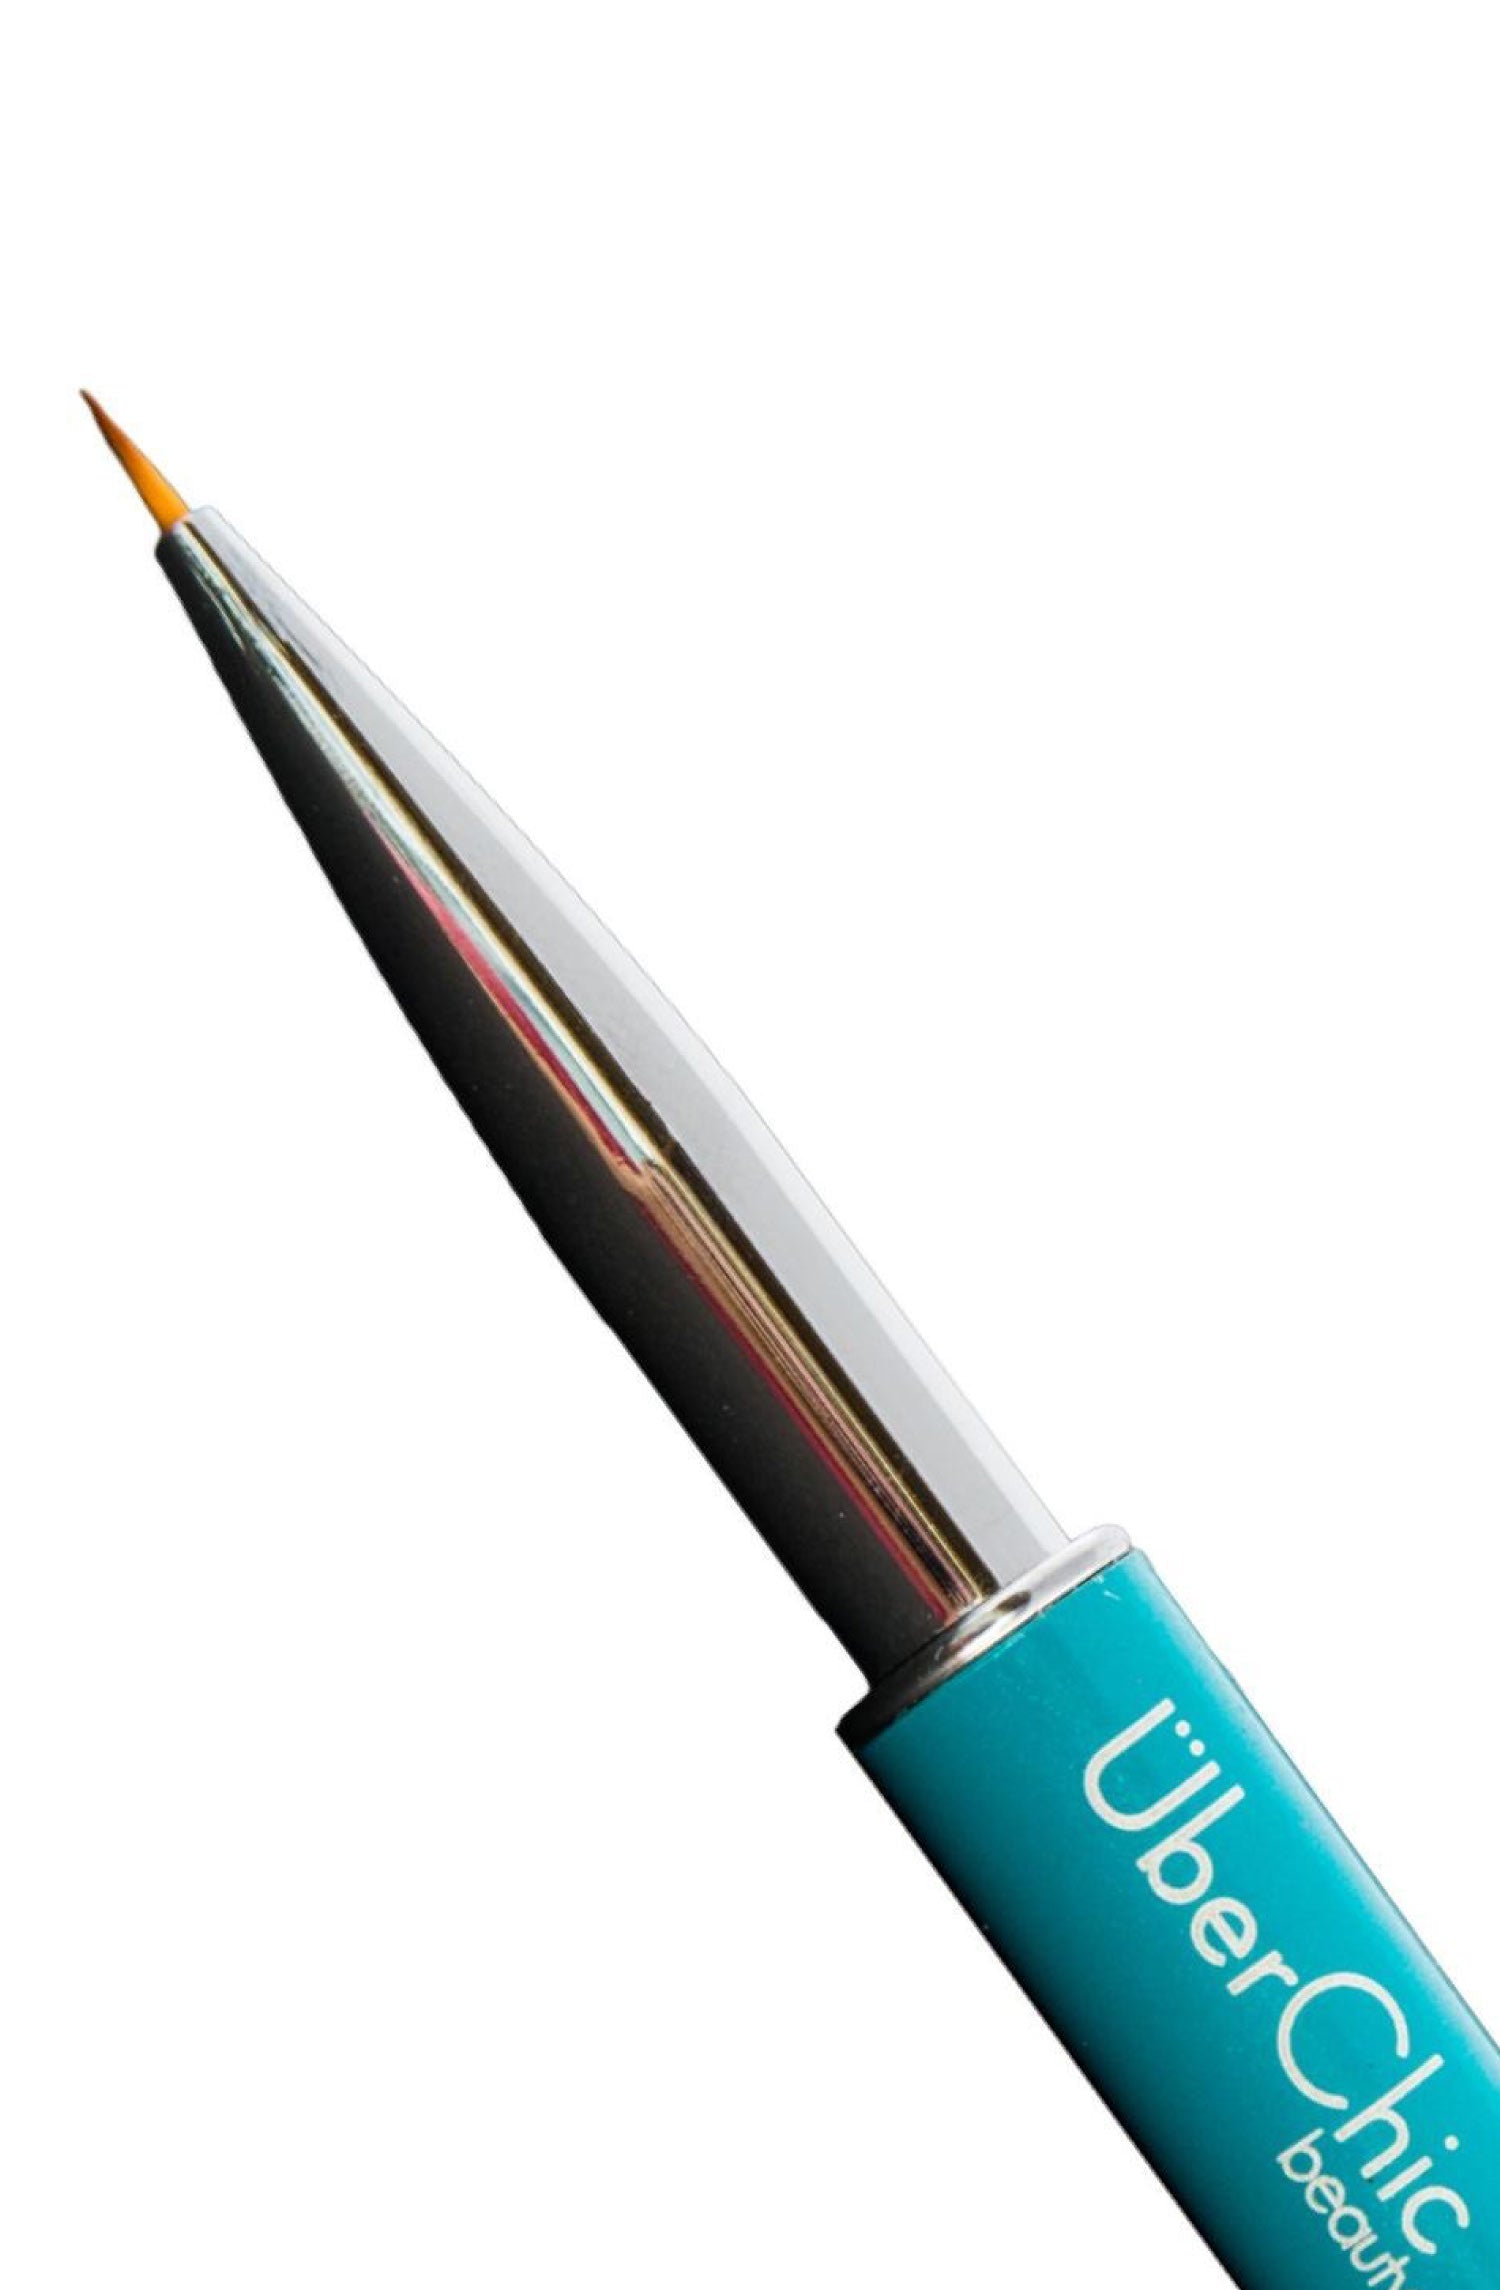 Detailing Brush #101 Premium Nail Art Tool